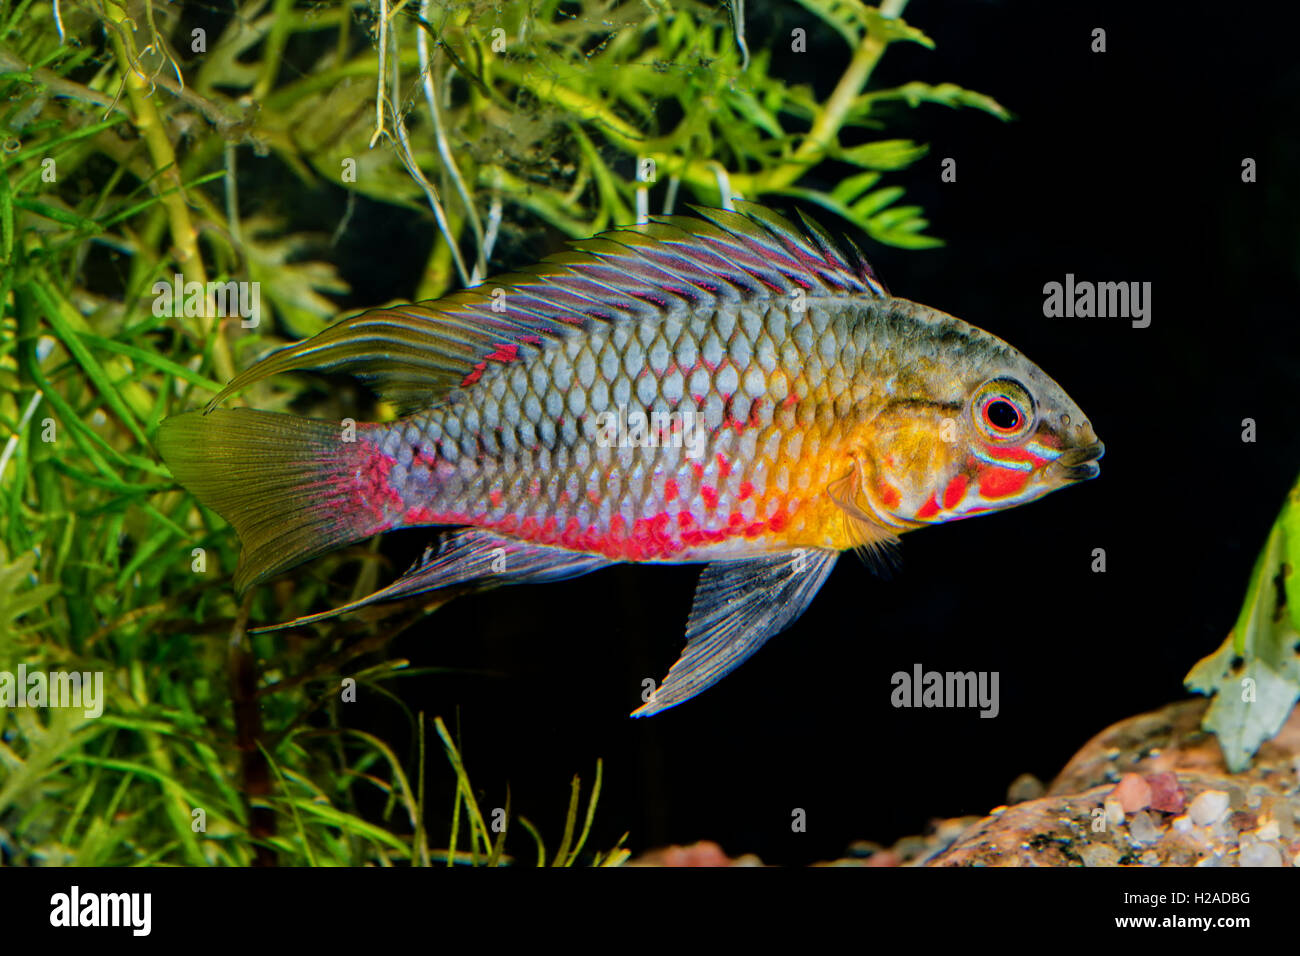 Cichlid fish Apistogramma hongsloi in a planted aquarium Stock Photo